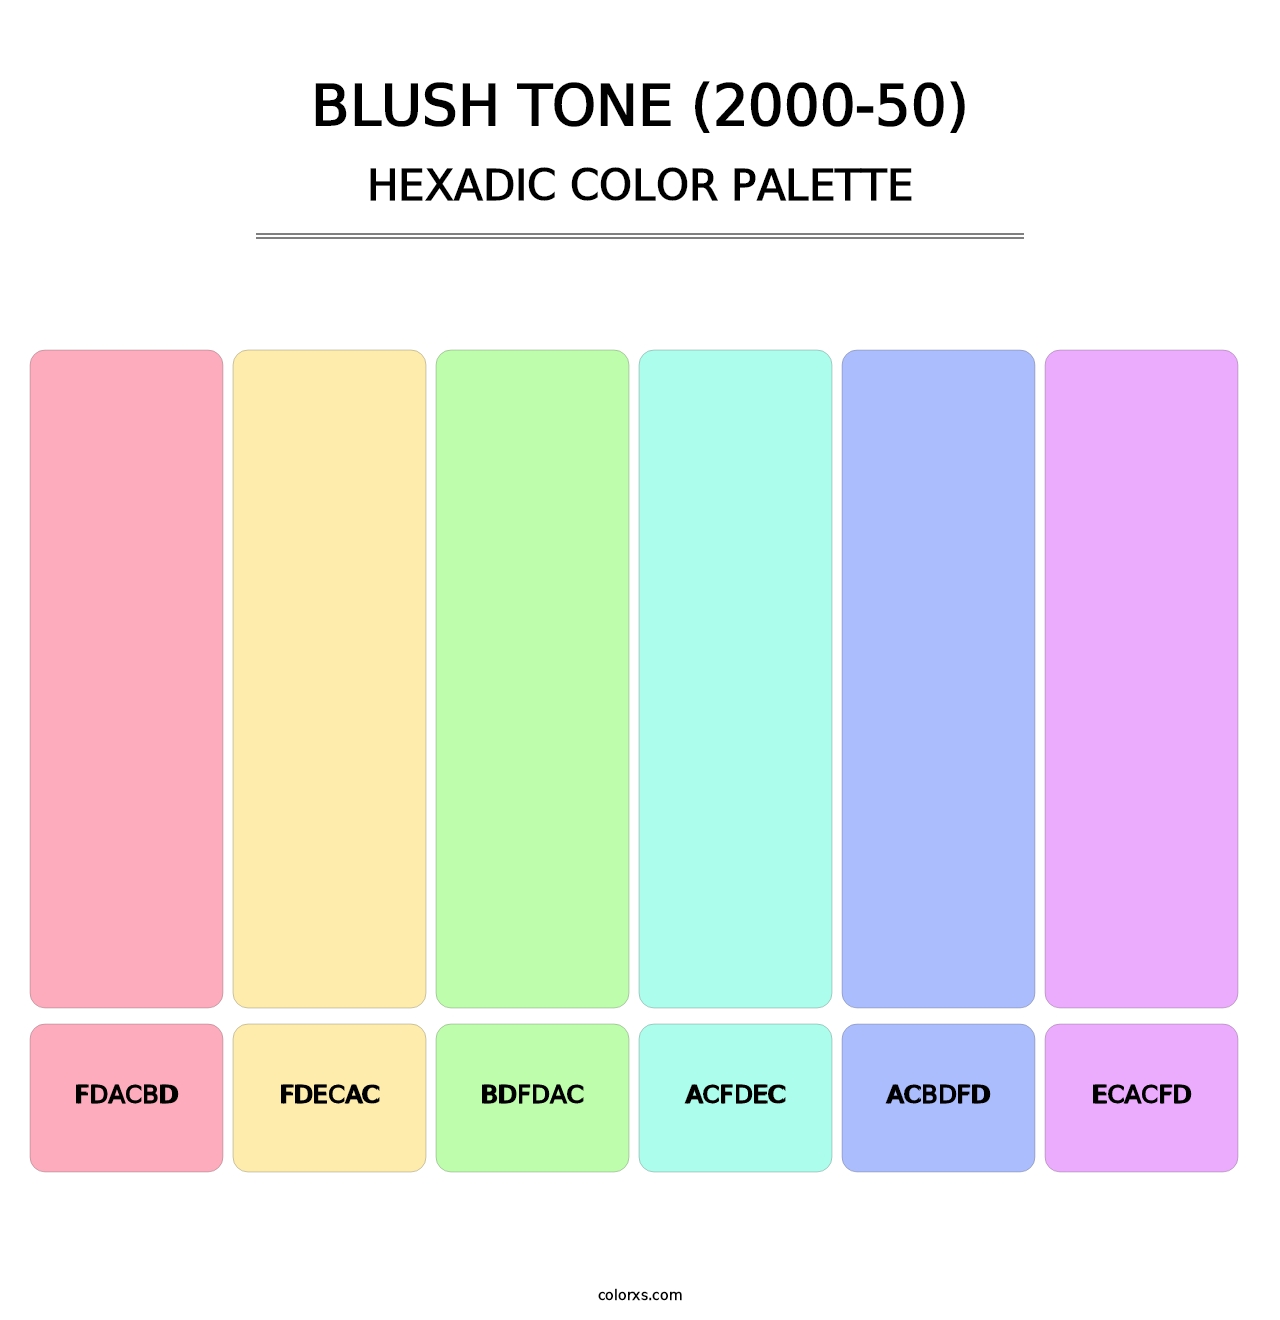 Blush Tone (2000-50) - Hexadic Color Palette